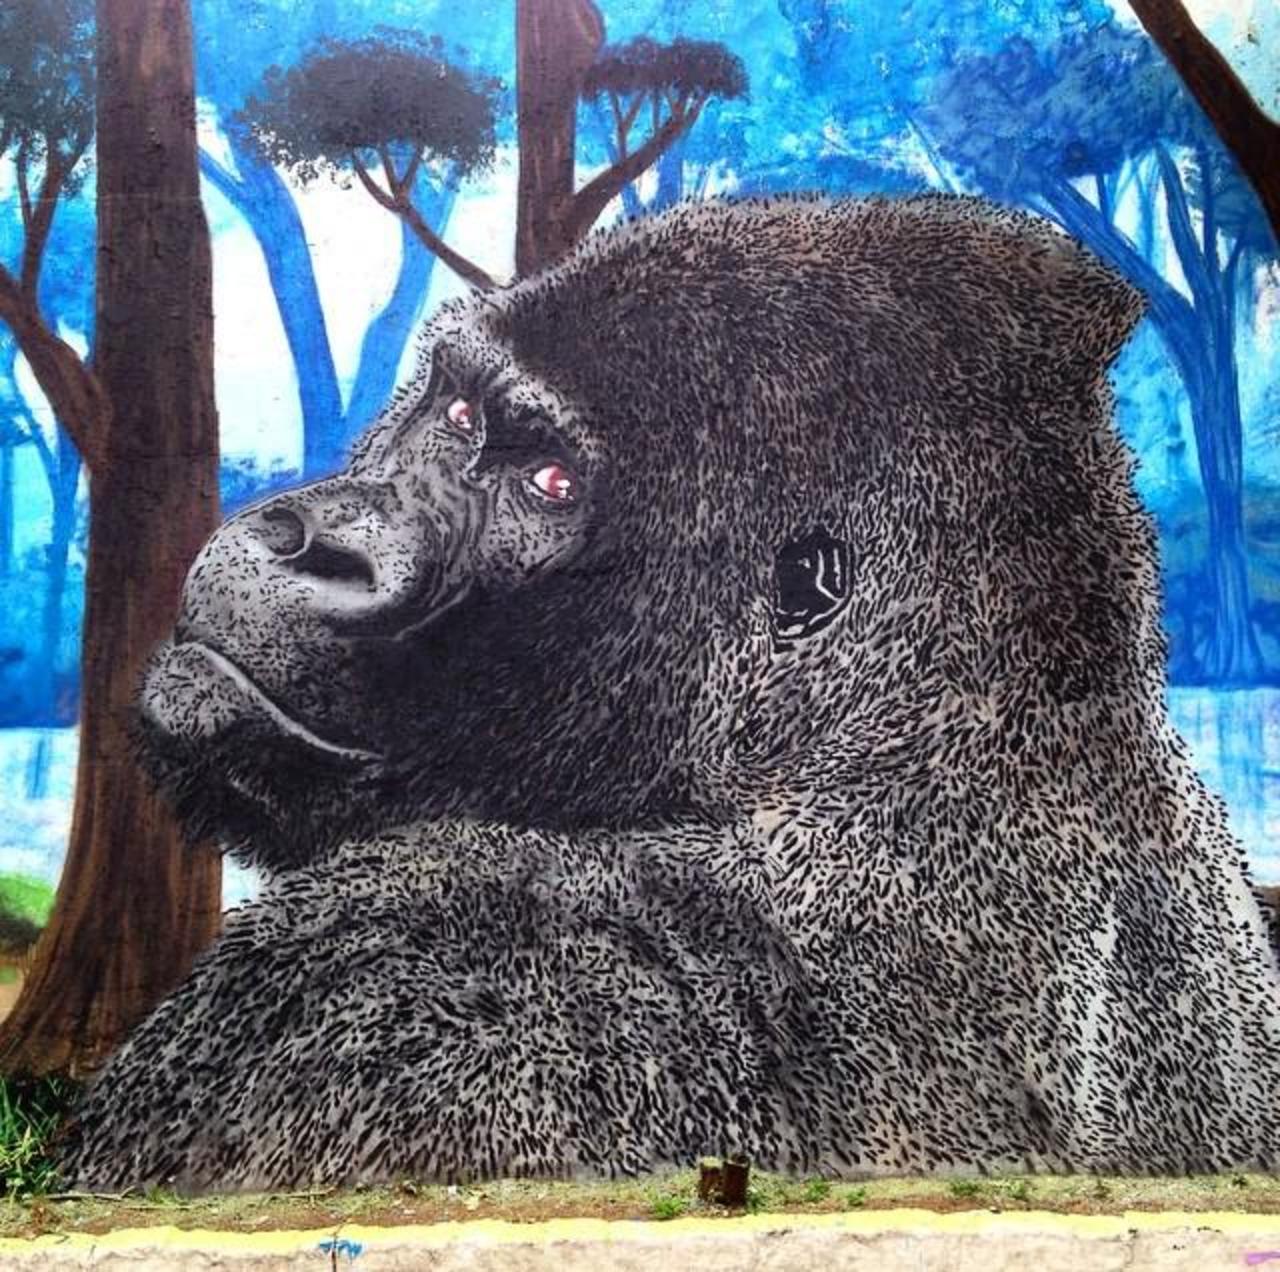 Superb Nature in Street Art piece by Thassio in São Paulo, Brazil  

#art #mural #graffiti #streetart http://t.co/8579M32Cqz